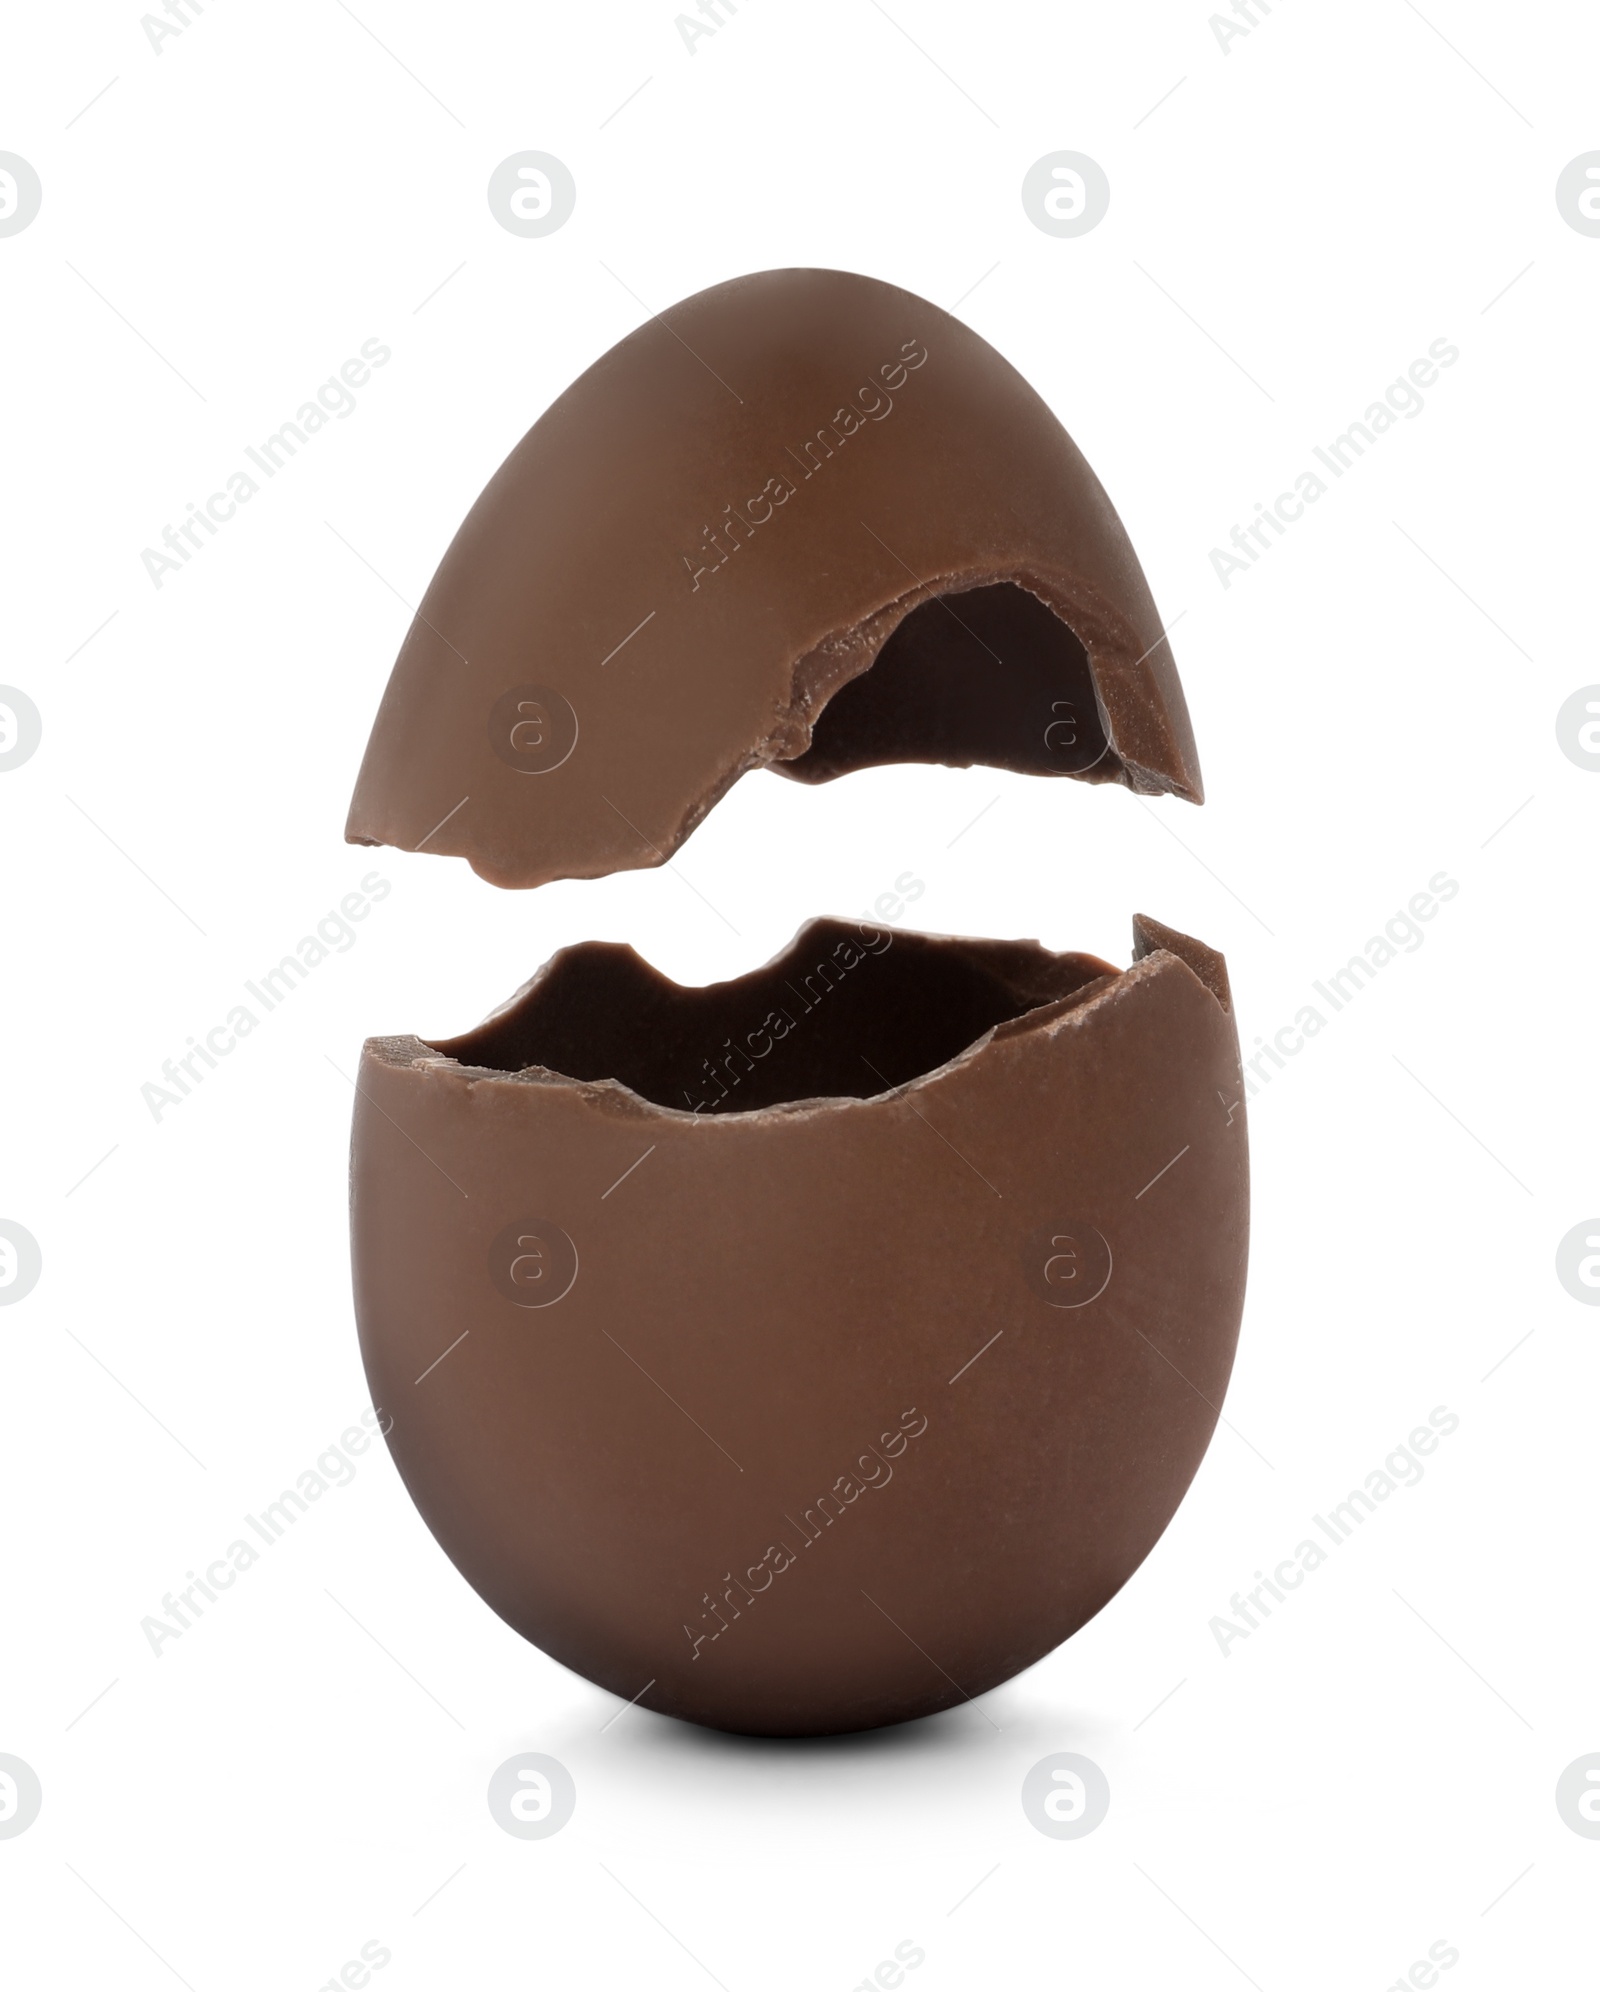 Image of Broken milk chocolate egg on white background